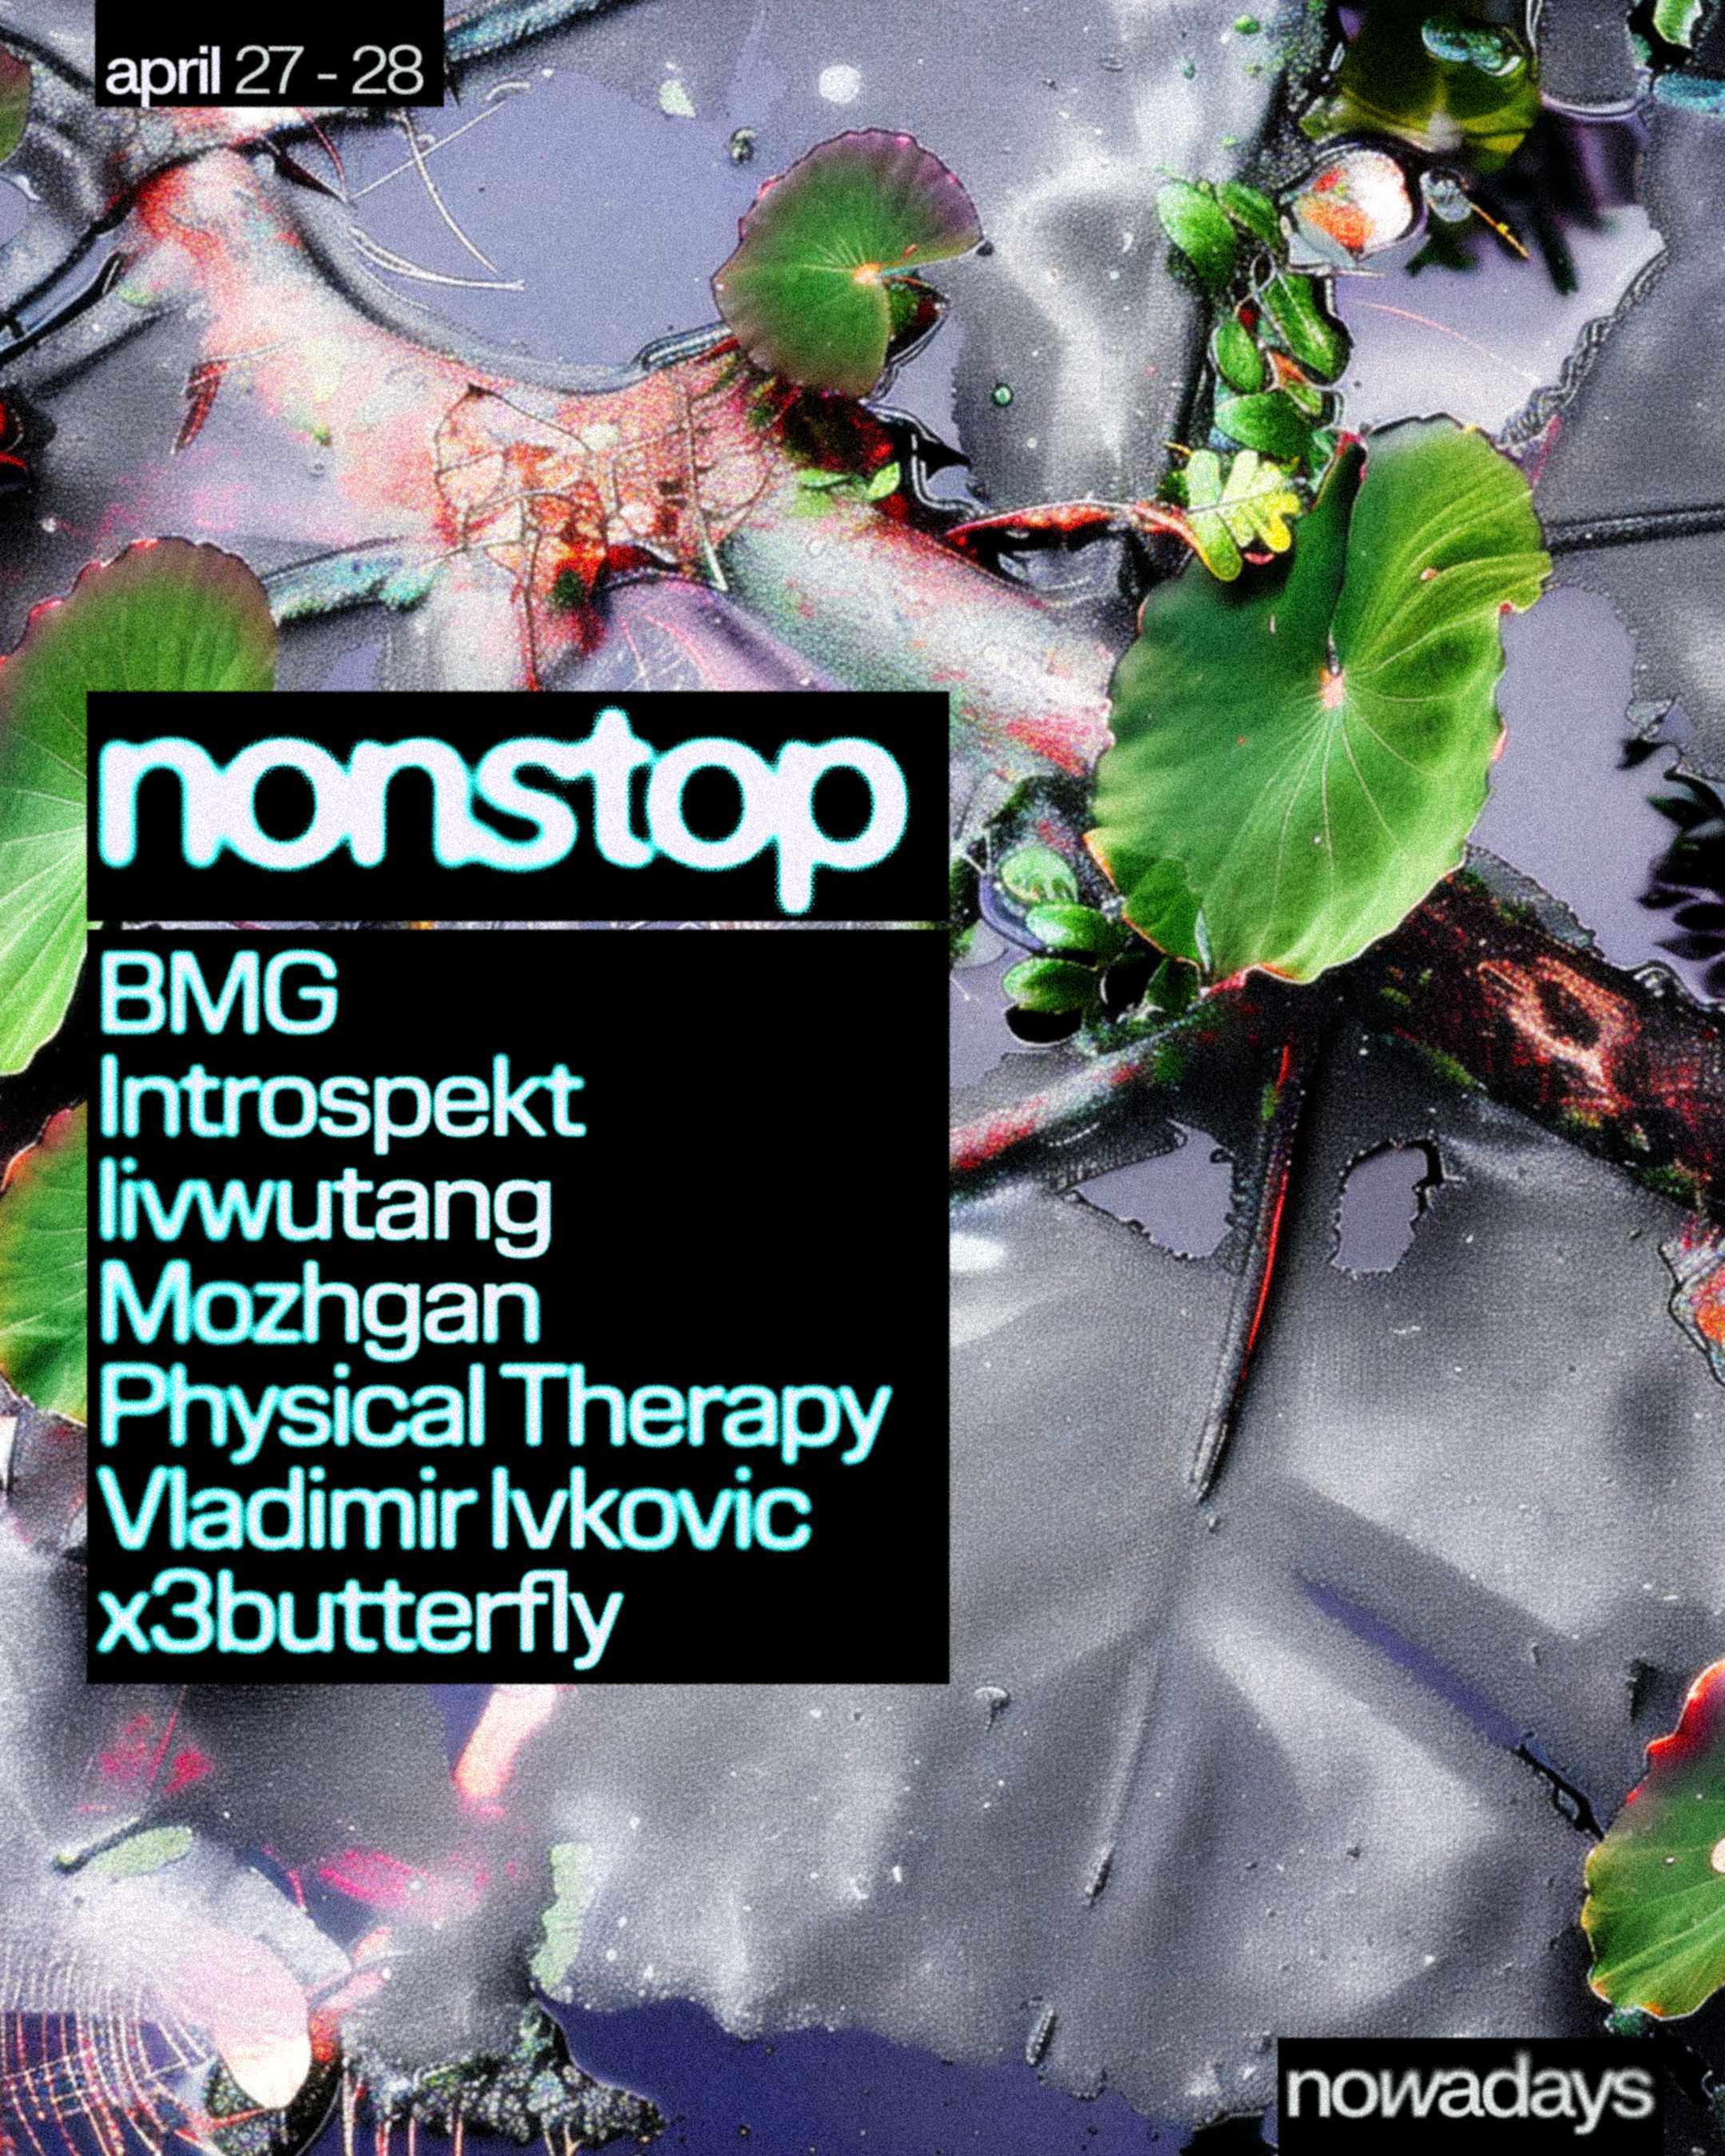 Nonstop: BMG, Introspekt, livwutang, Mozhgan, Physical Therapy, Vladimir Ivkovic, x3butterfly - フライヤー表